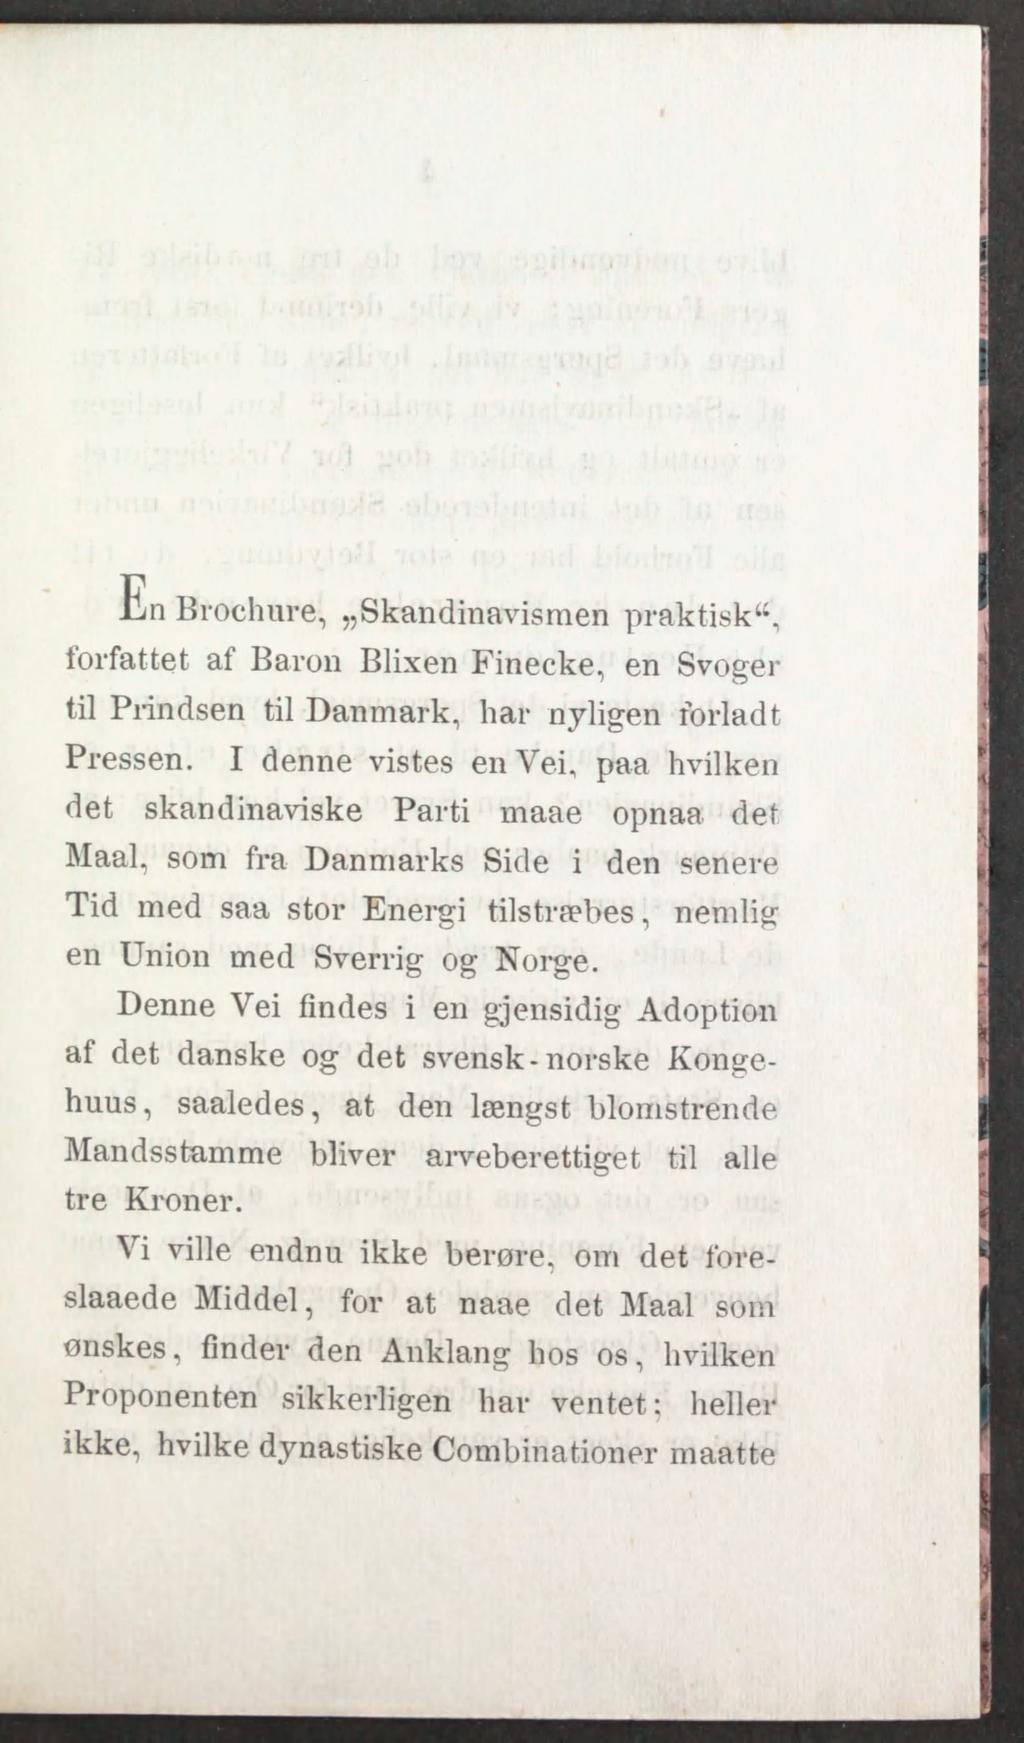 En Brochure, Skandinavismen praktisk", forfattet at Baron Blixen Finecke, en Svoger til Prindsen til Danmark, har nyligen forladt Pressen.